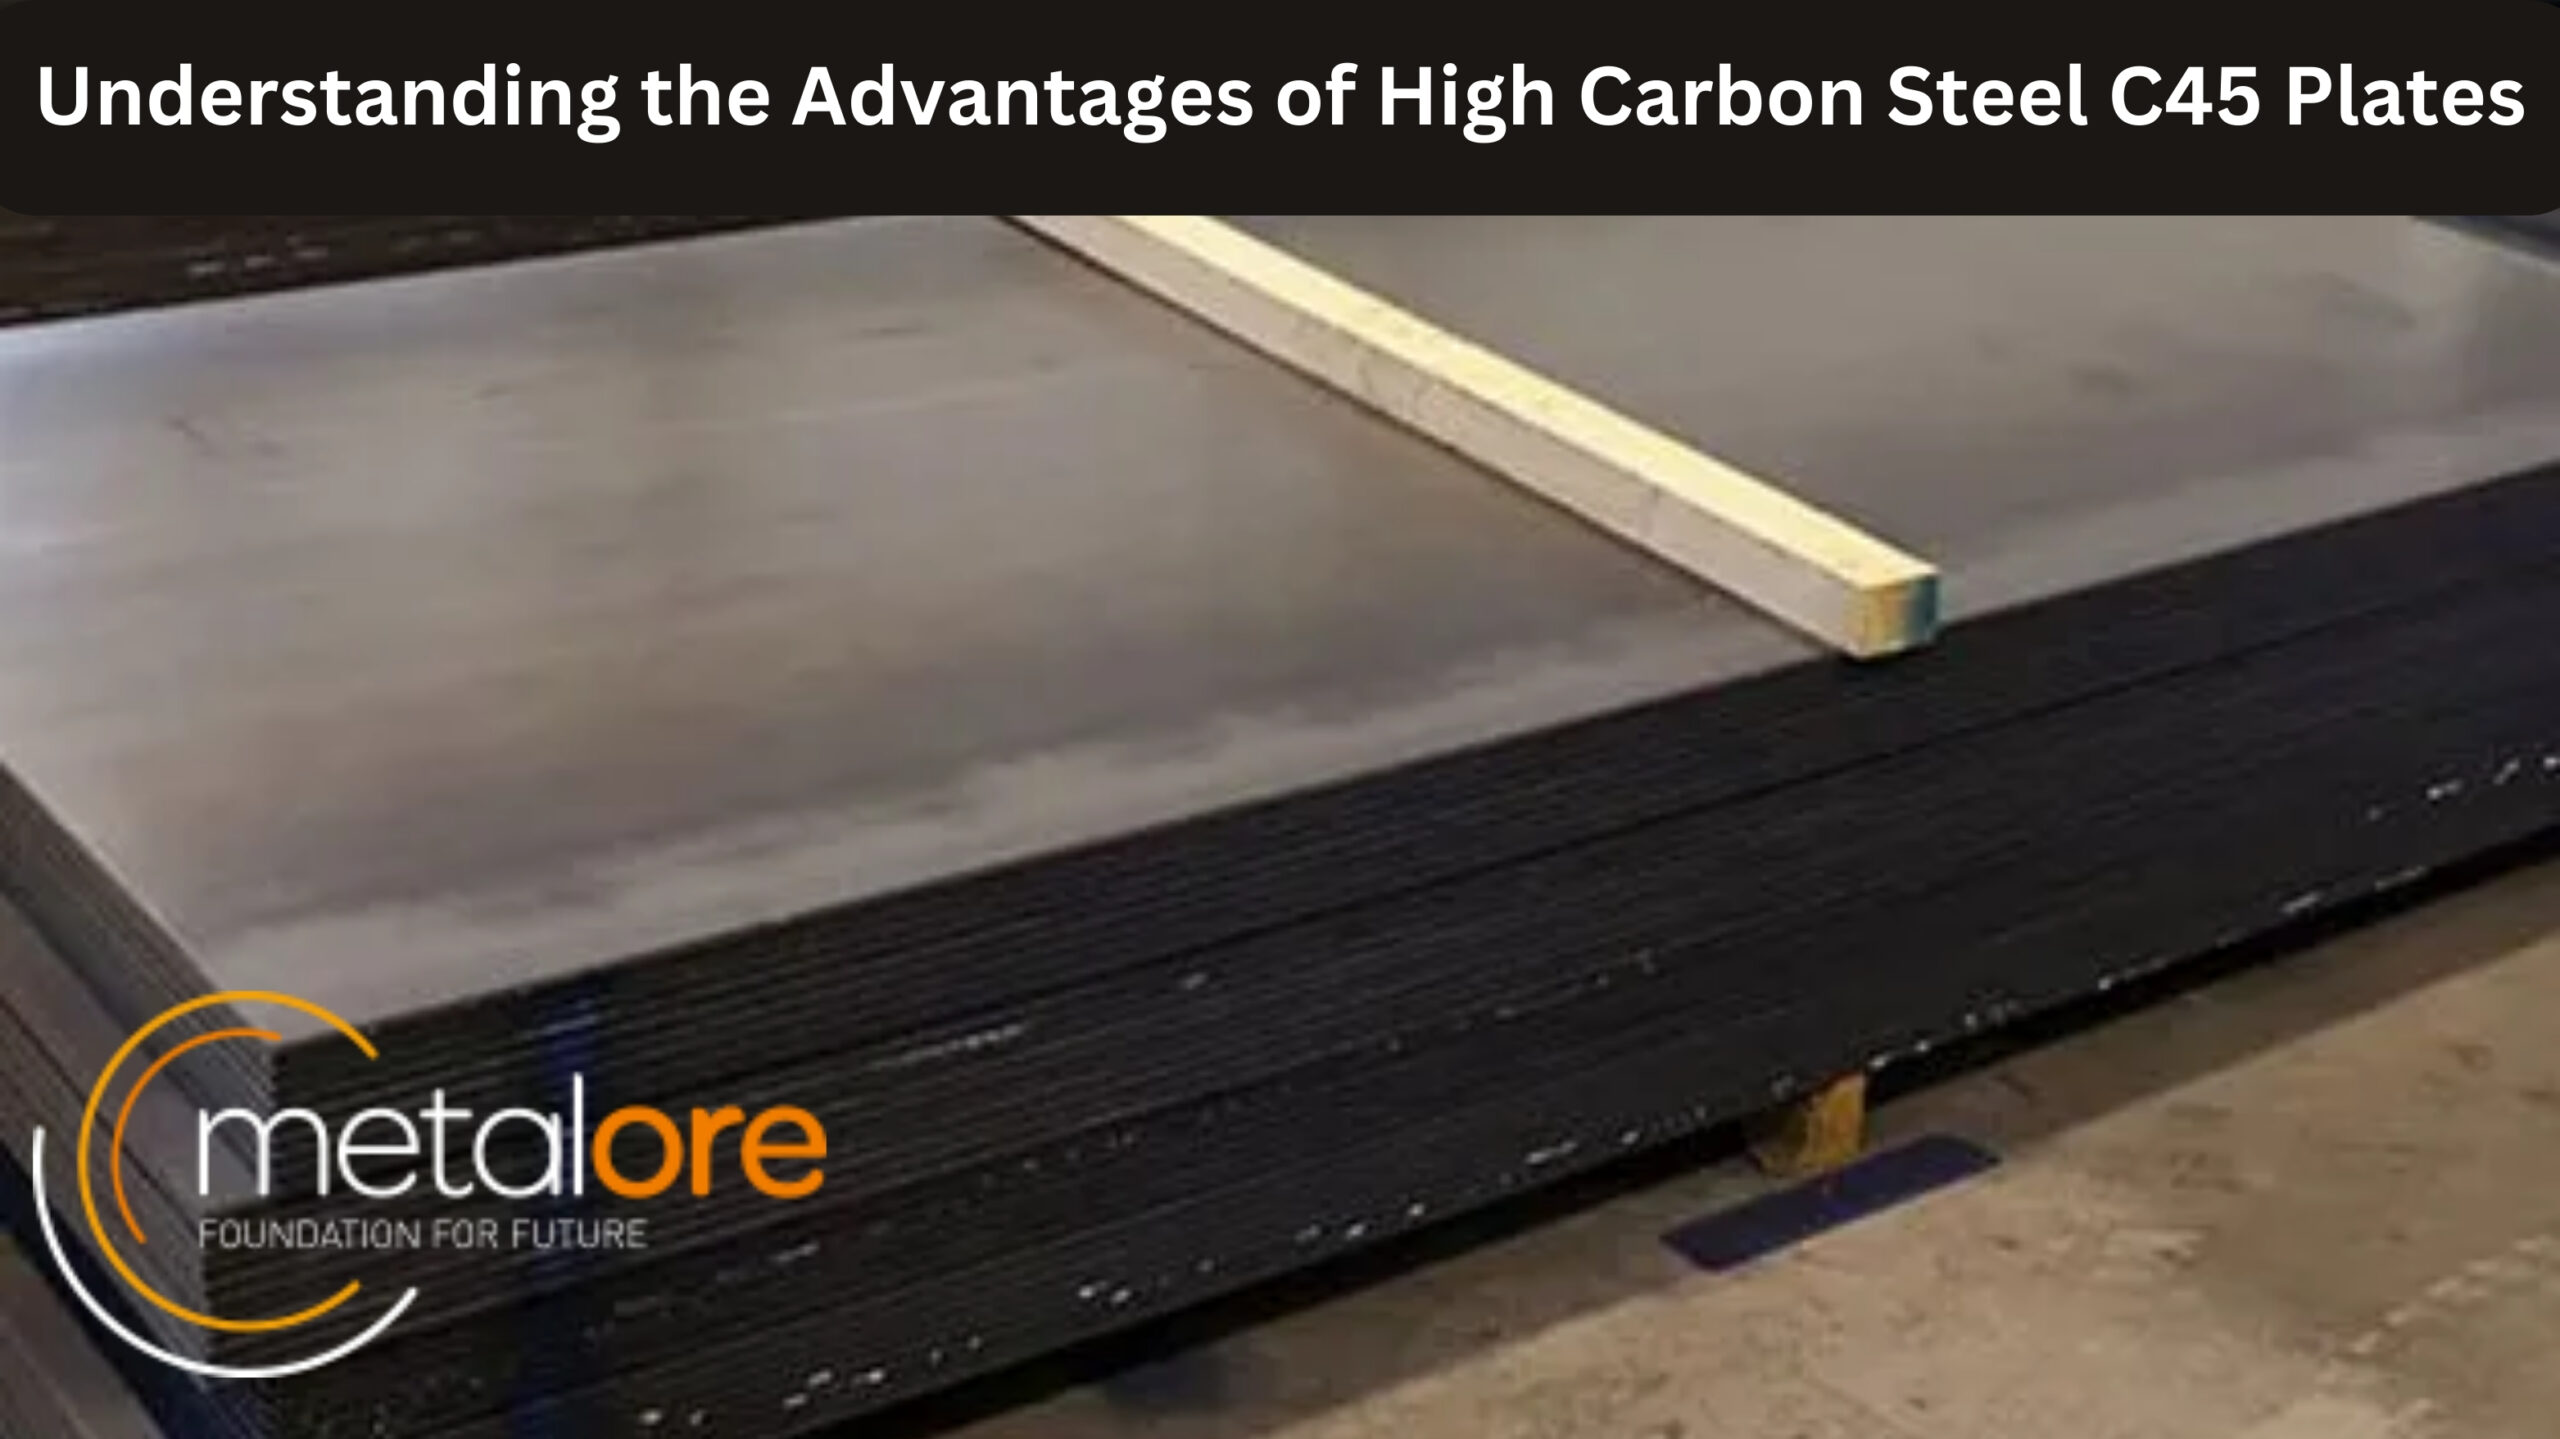 High Carbon Steel C45 Plates